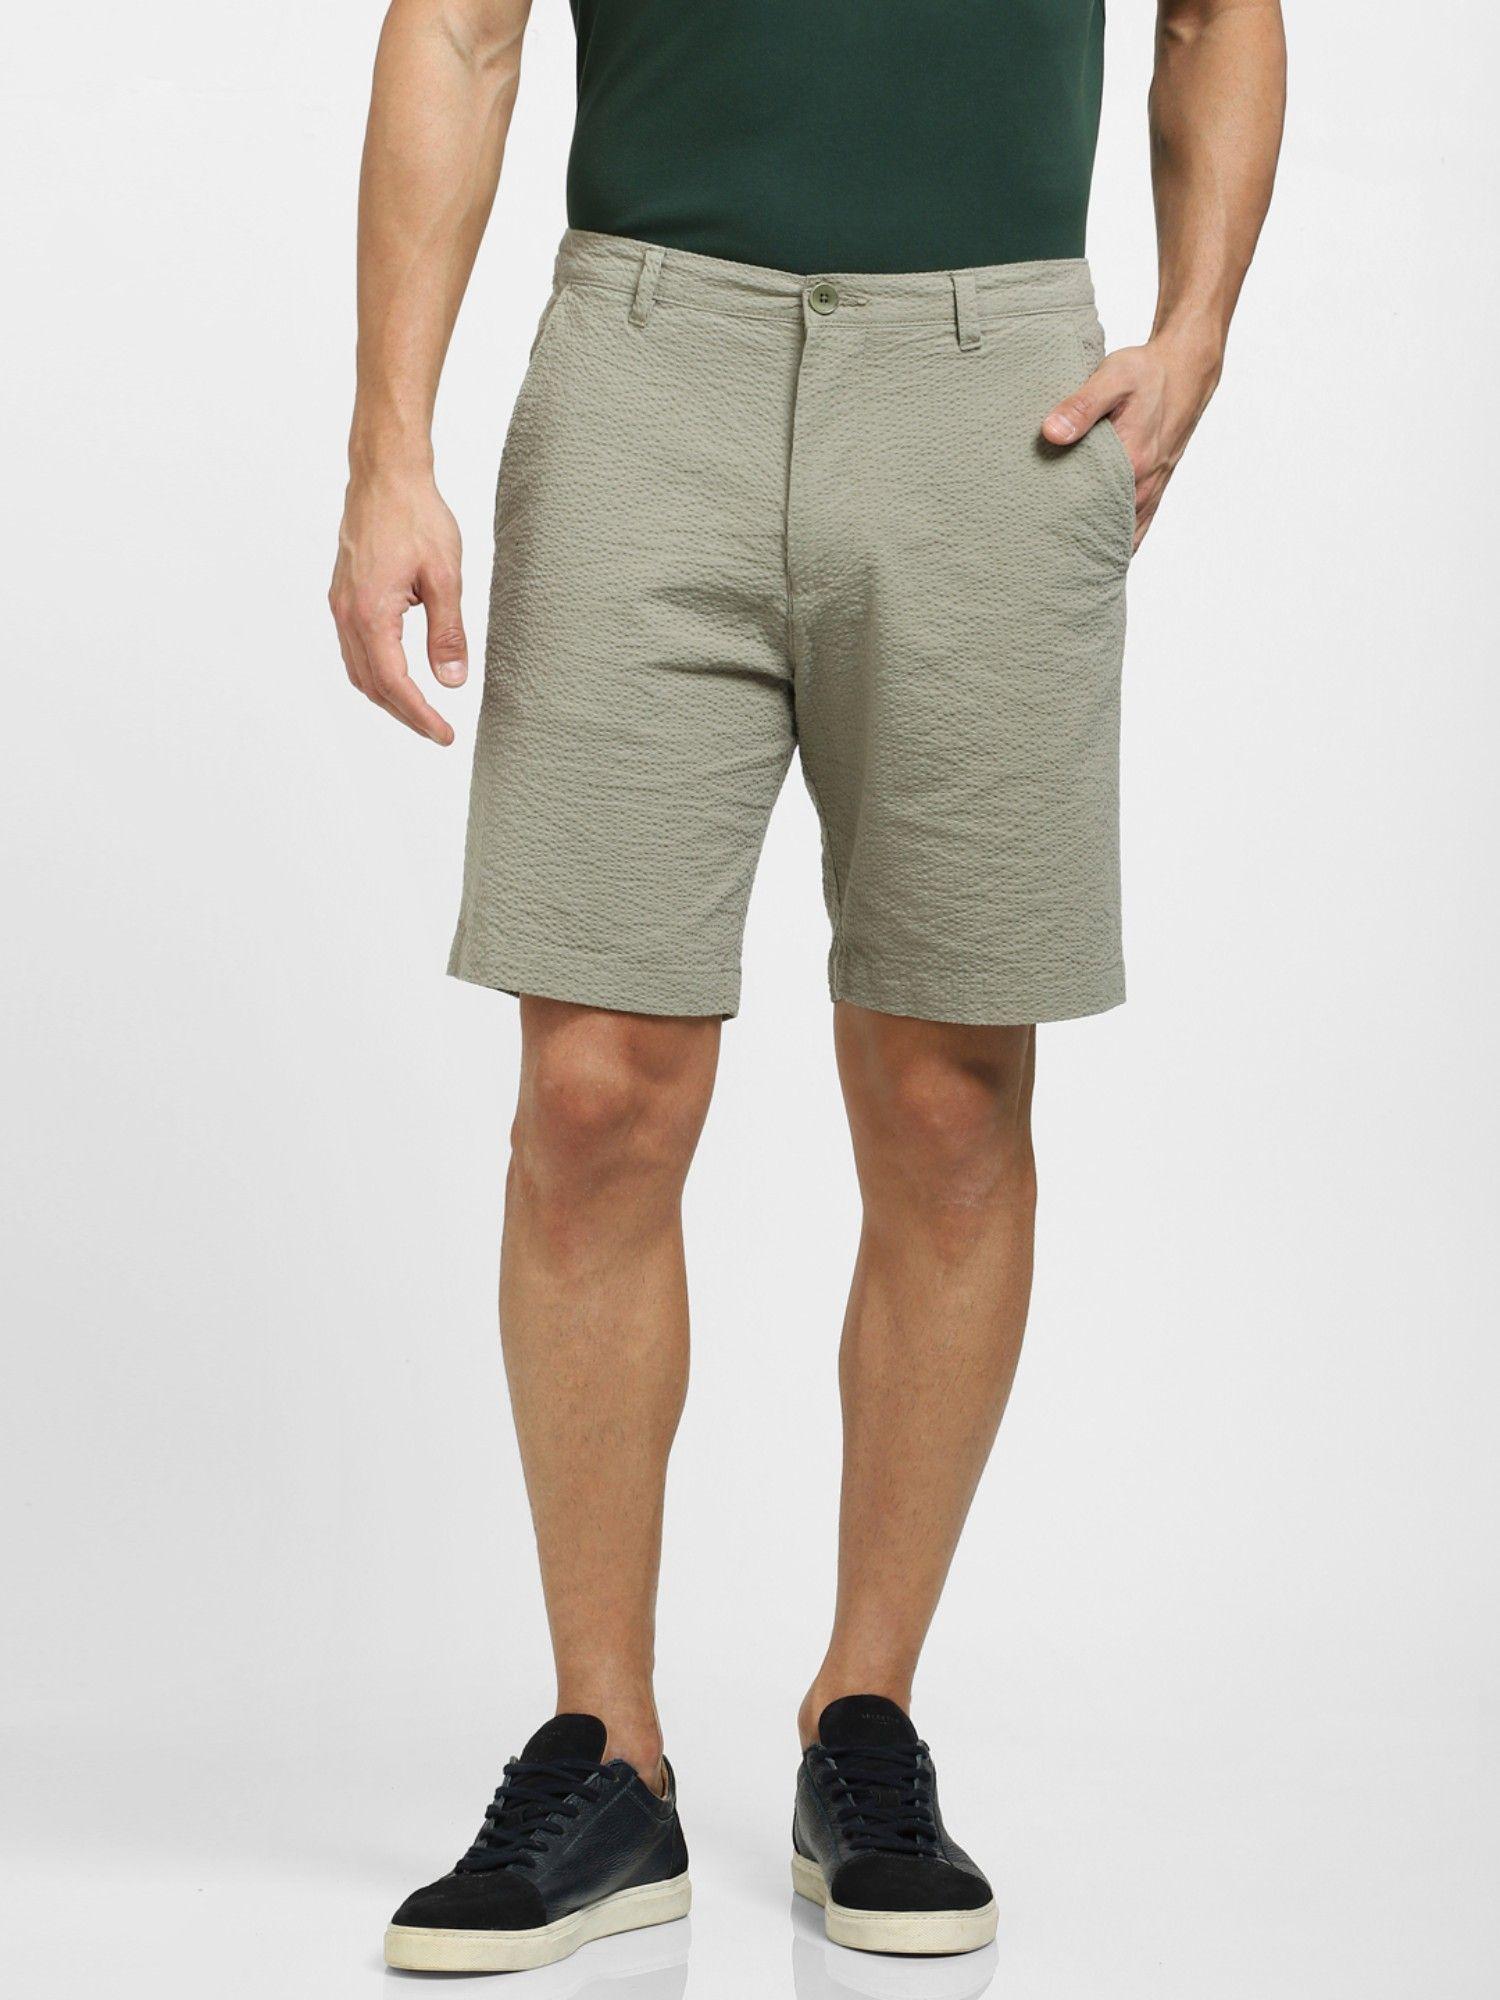 green mid rise shorts